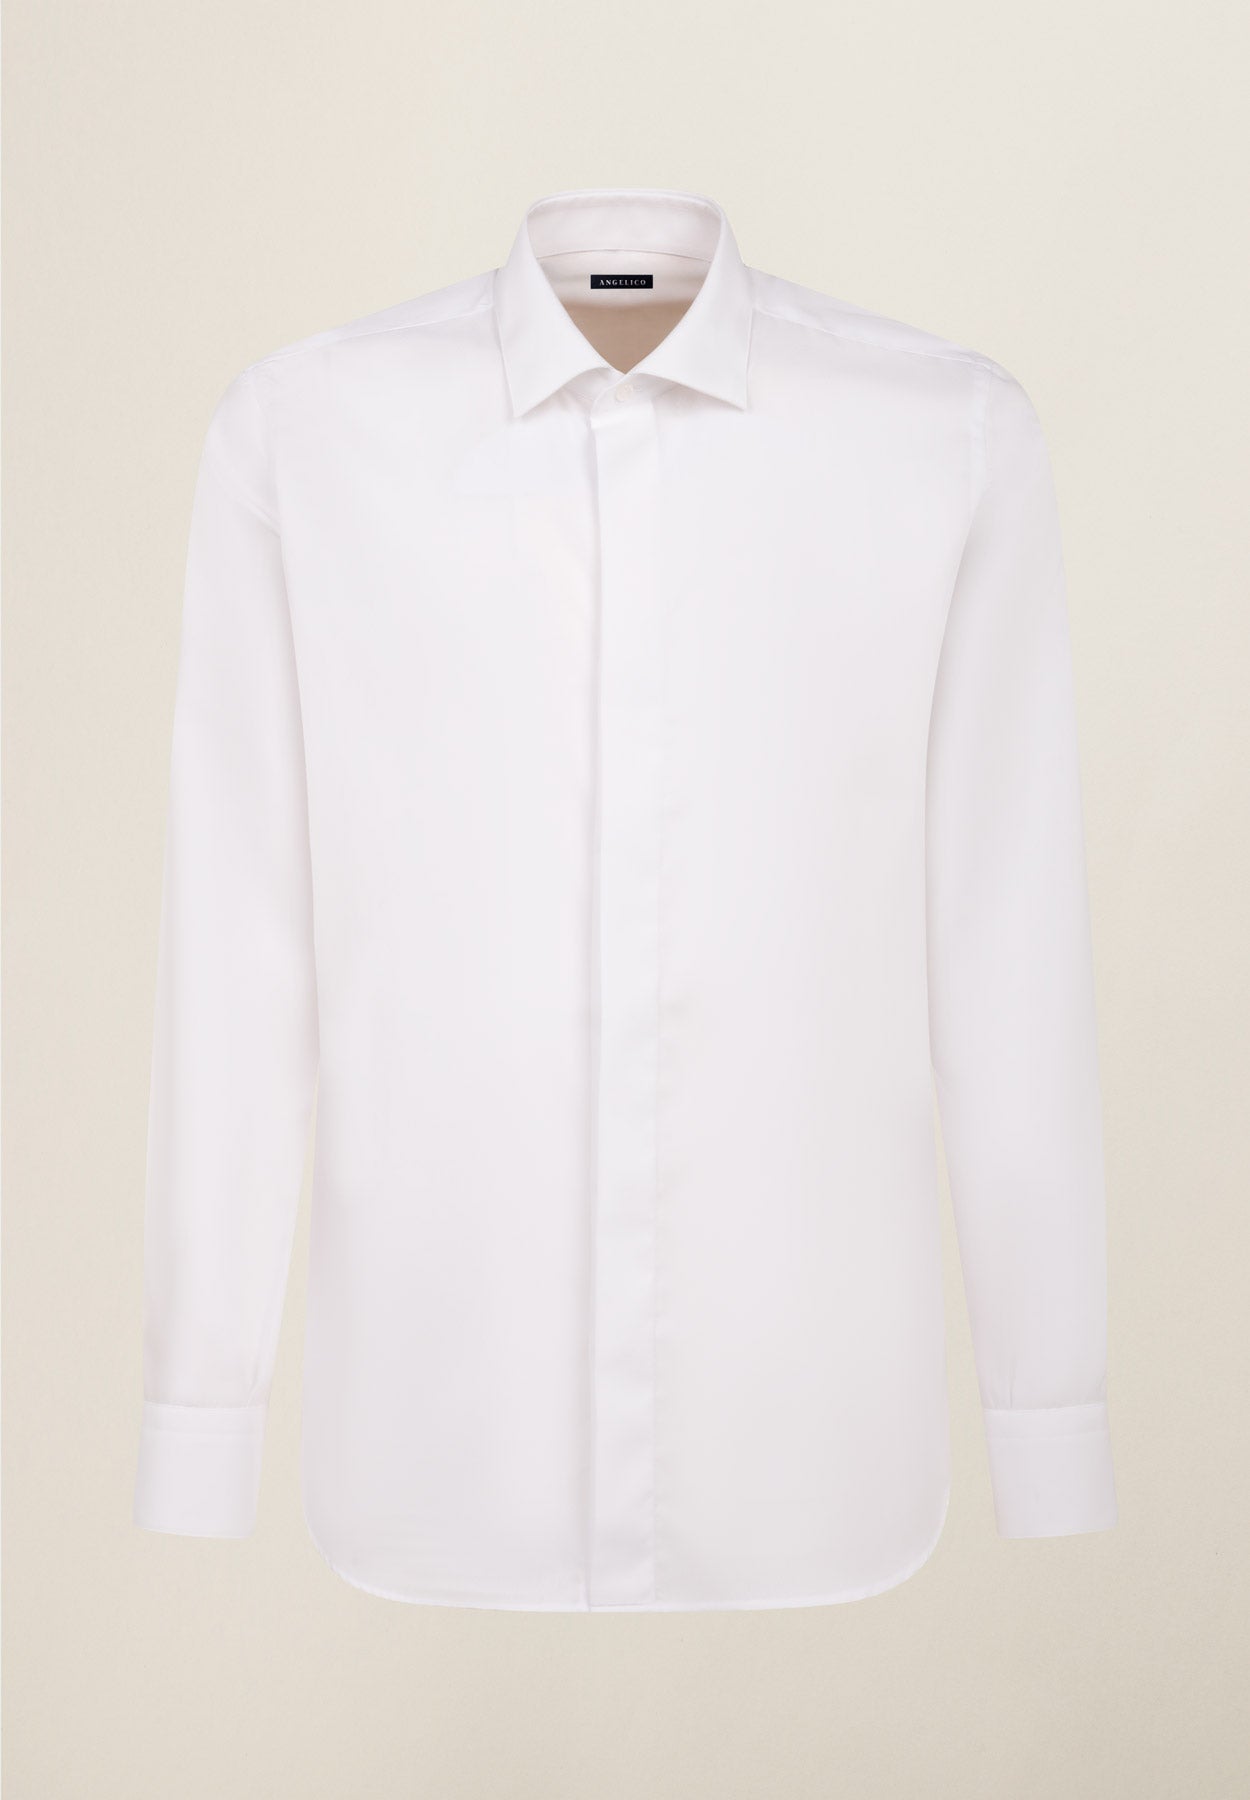 White English button-down shirt slim fit cotton